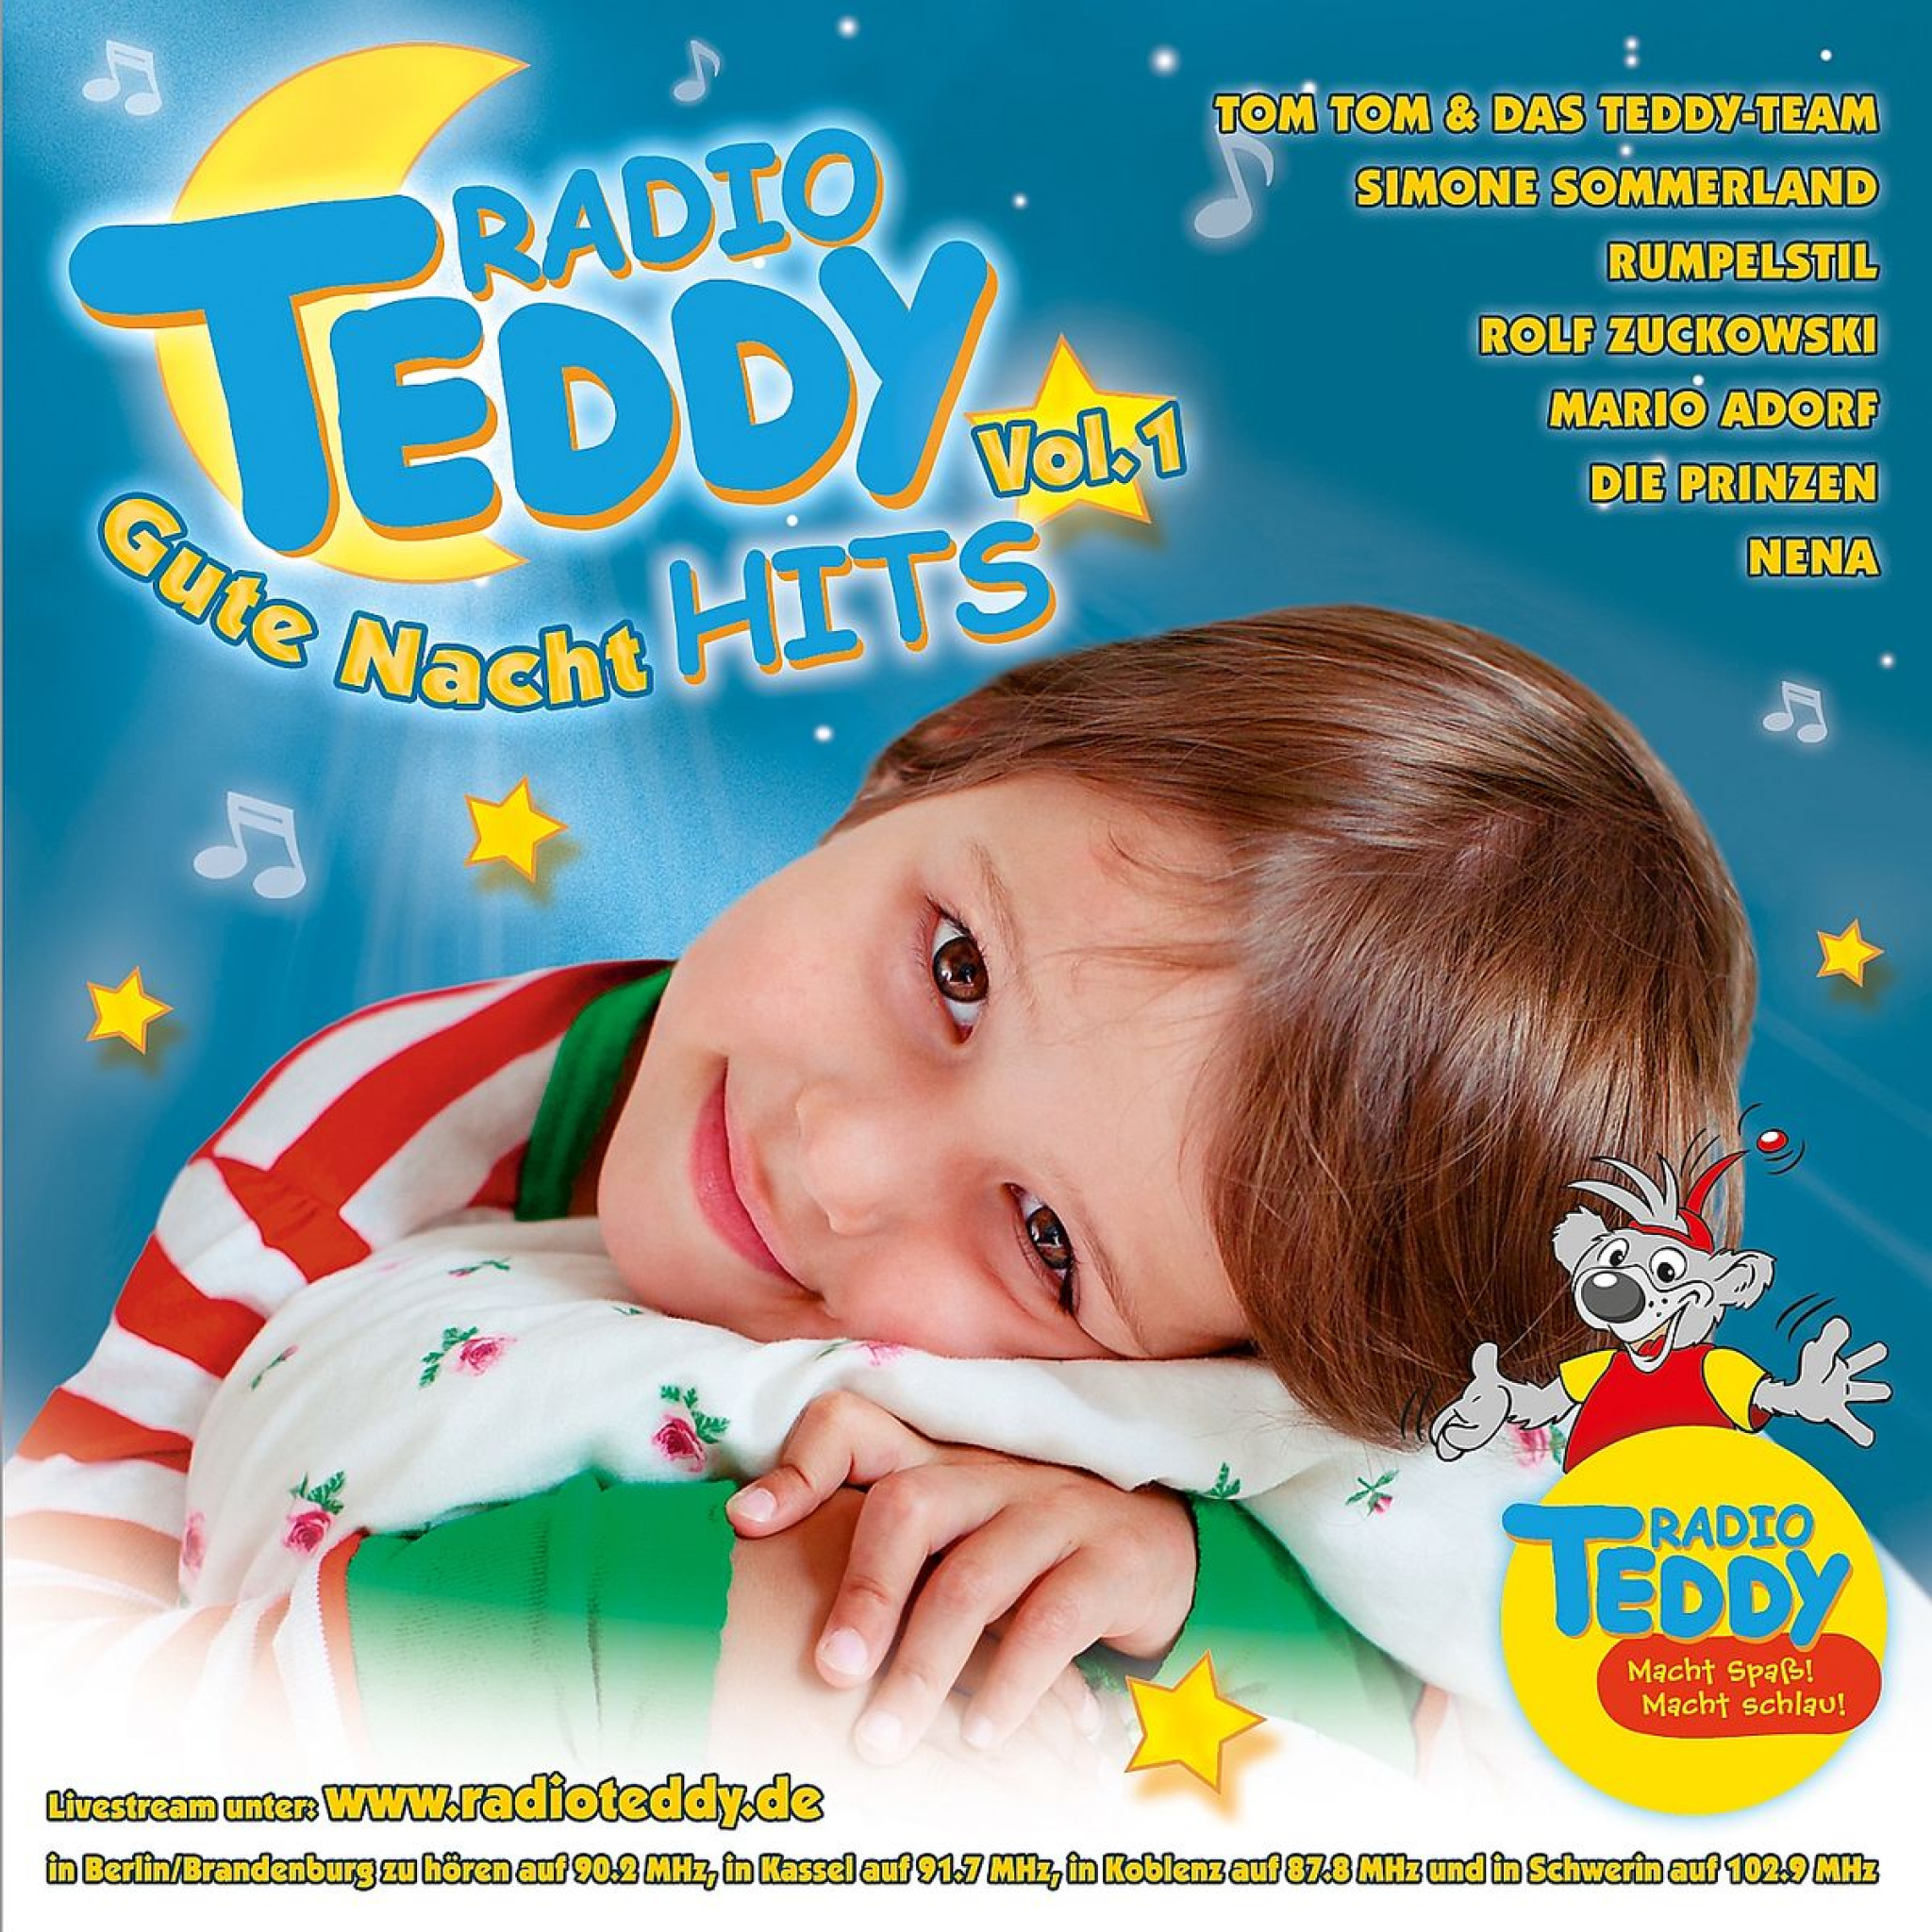 Radio TEDDY Gute Nacht Hits Vol. 1